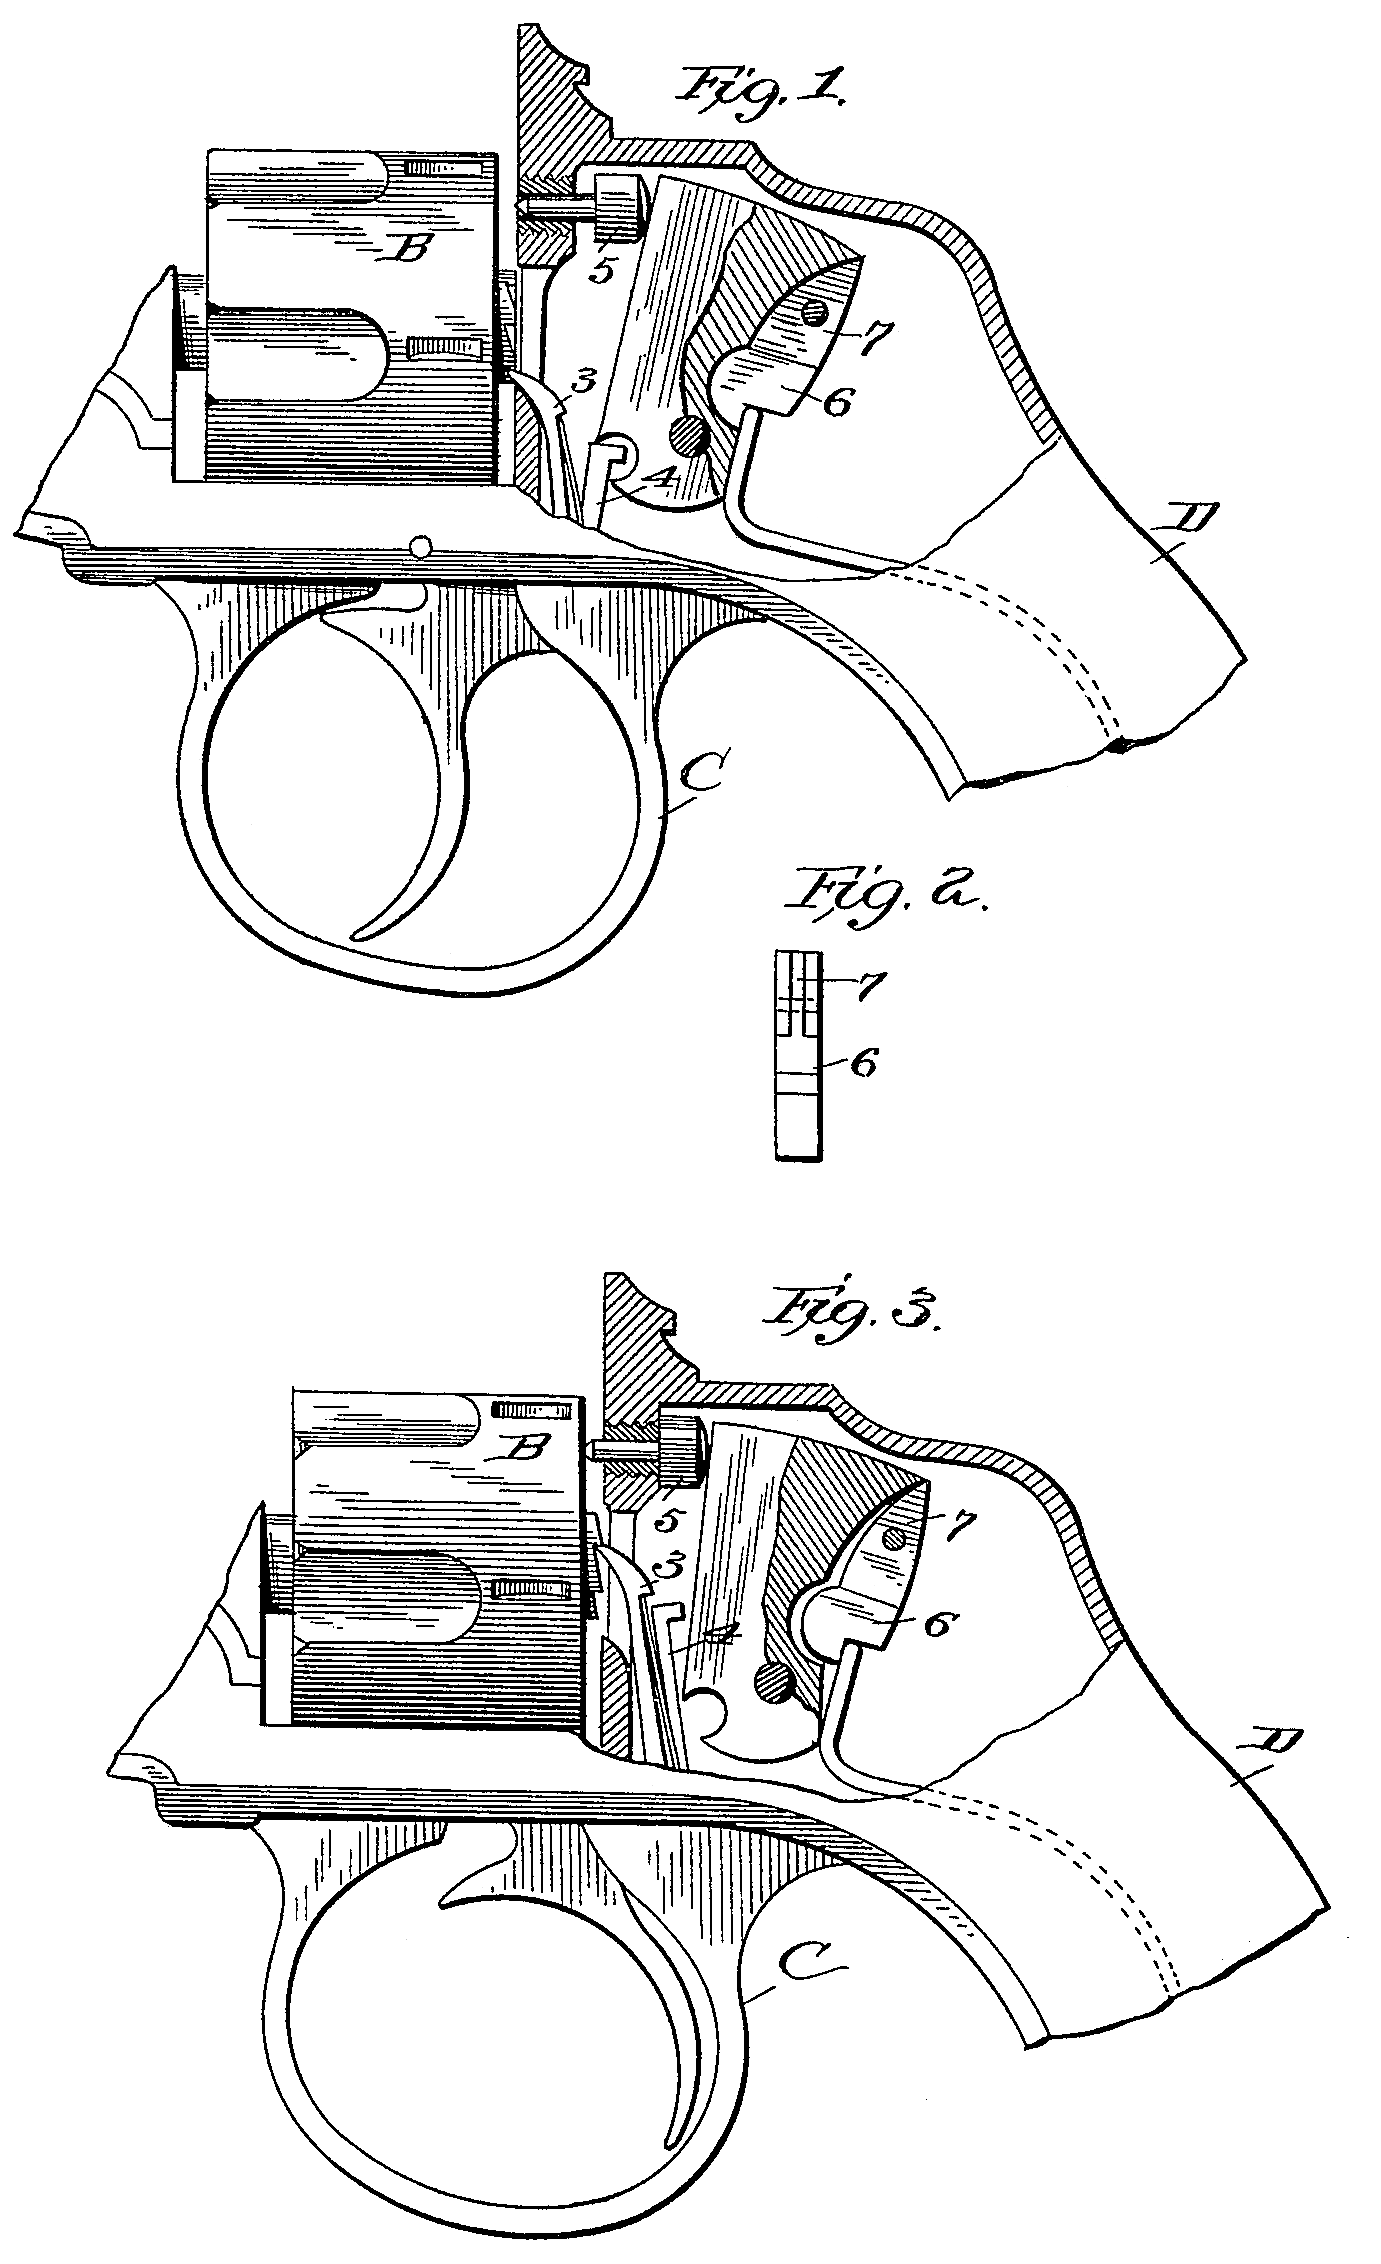 Patent: C. Foehl & C. A. Weeks